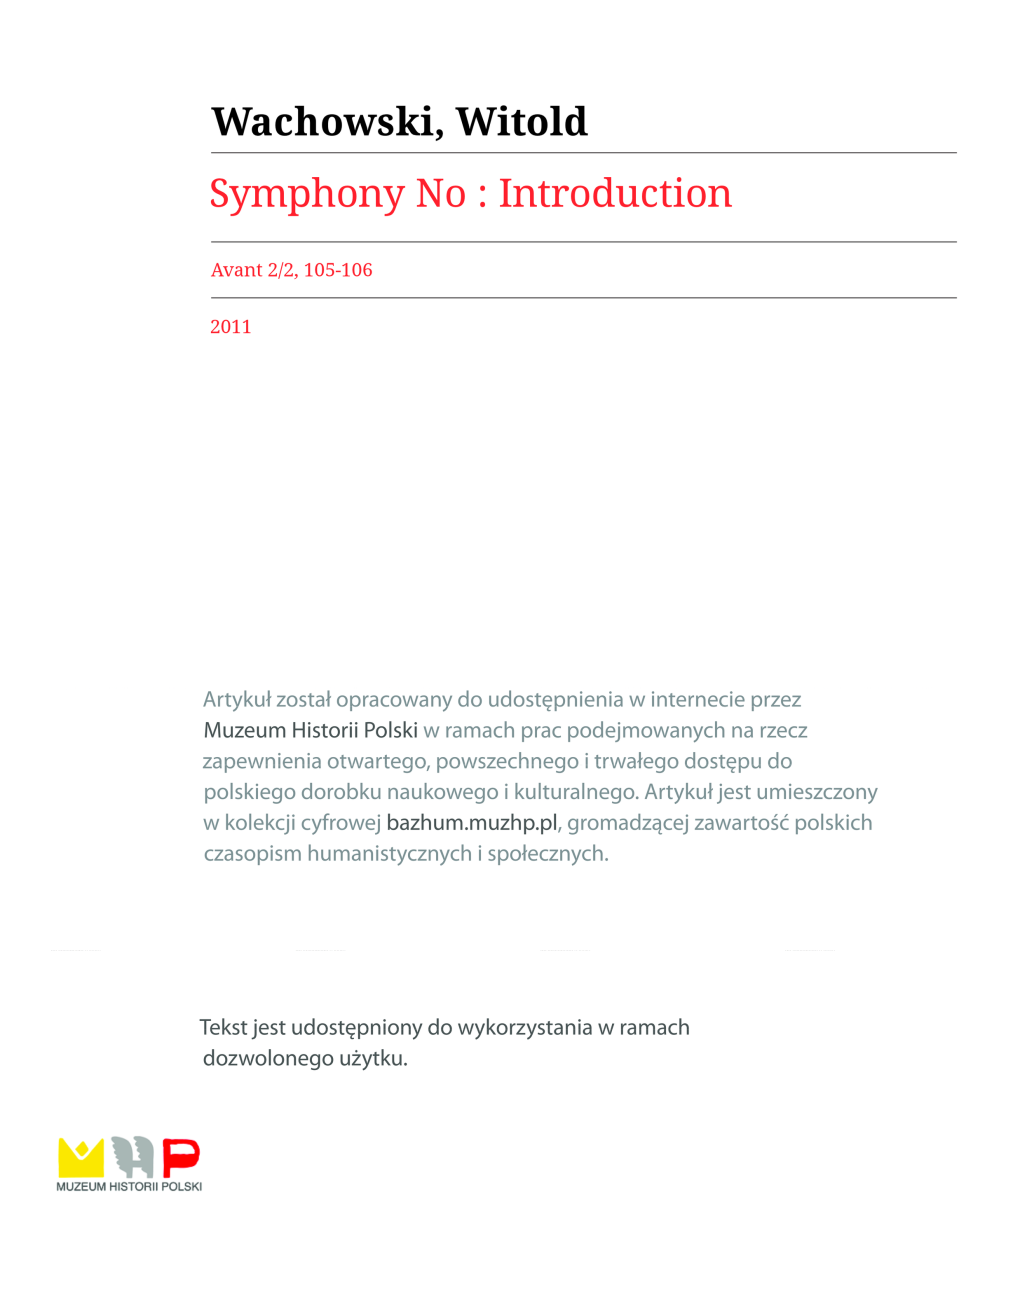 Symphony No Introduction